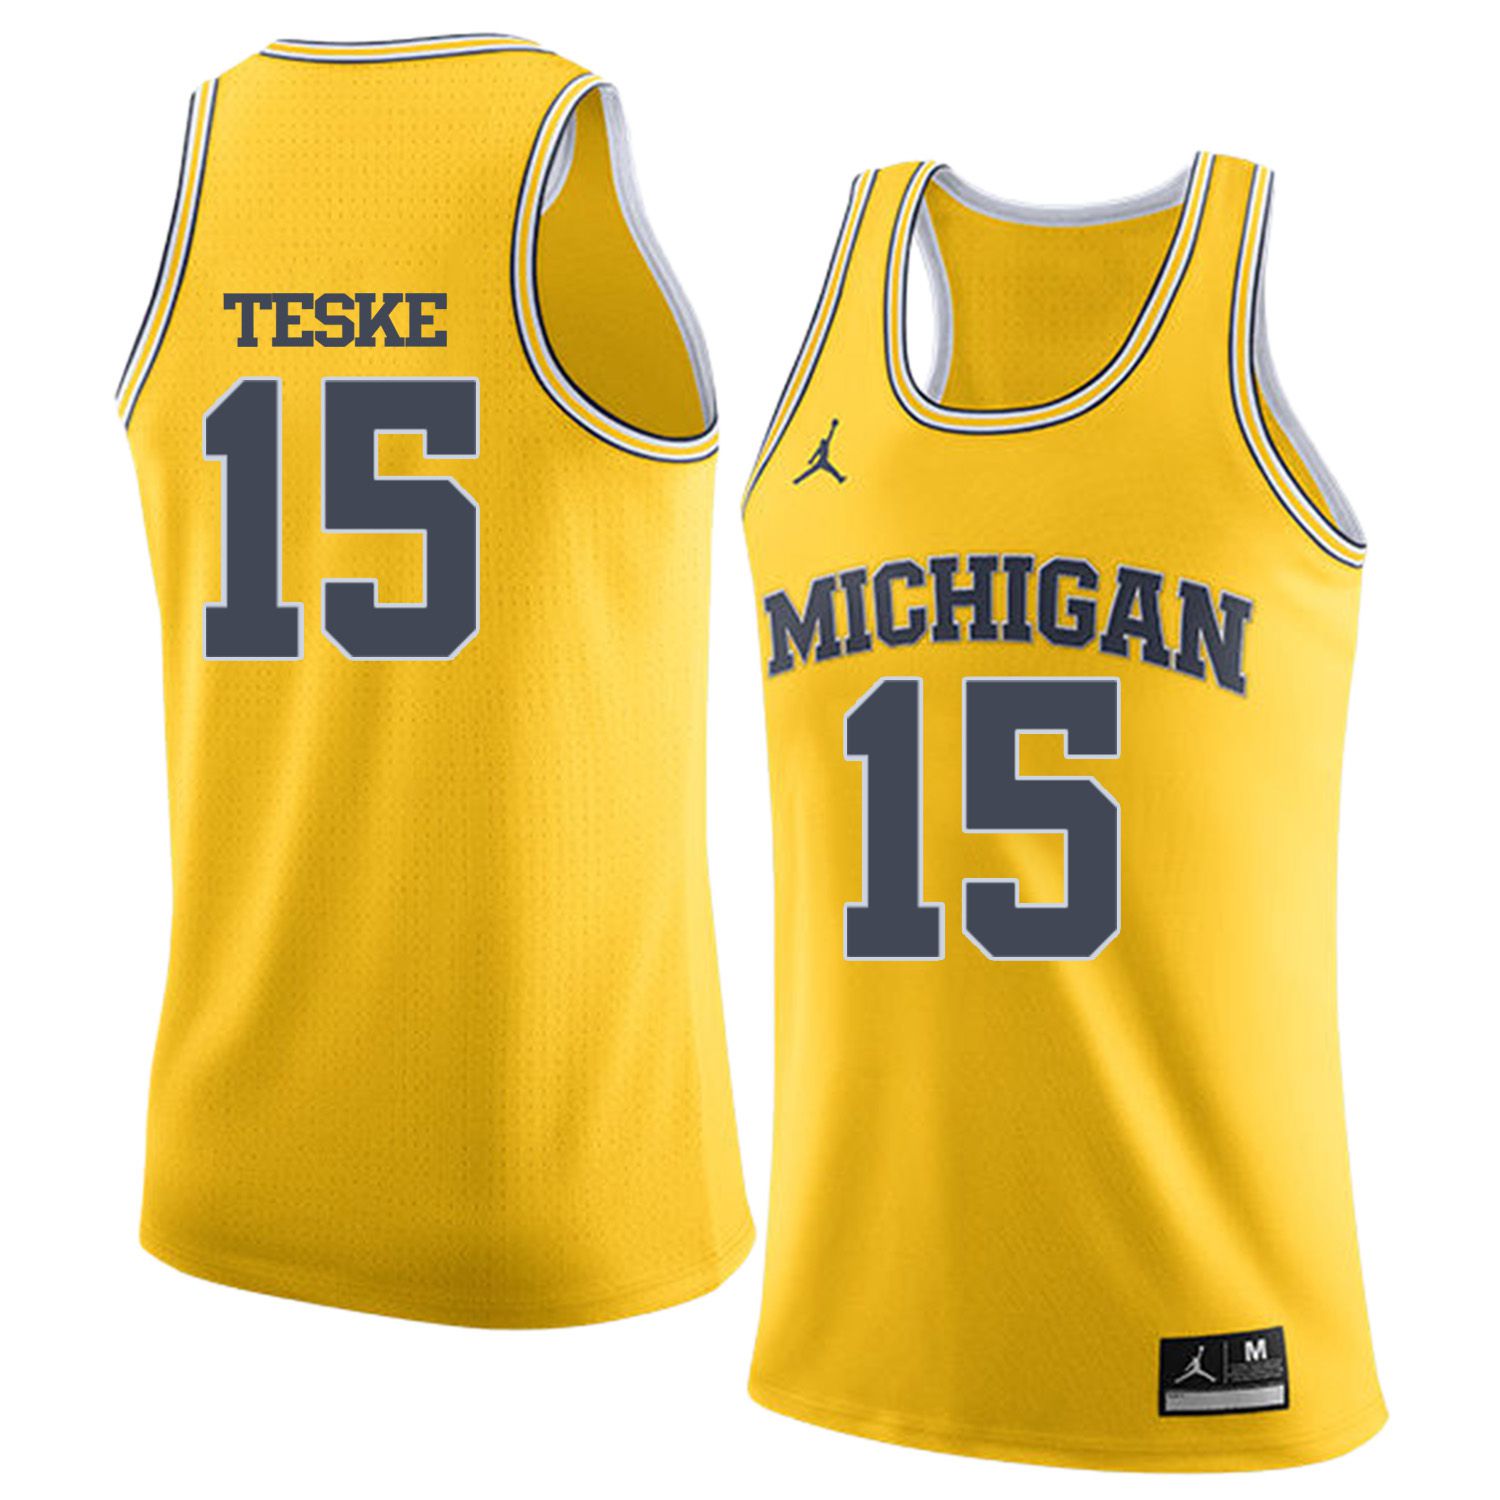 Men Jordan University of Michigan Basketball Yellow 15 Teske Customized NCAA Jerseys